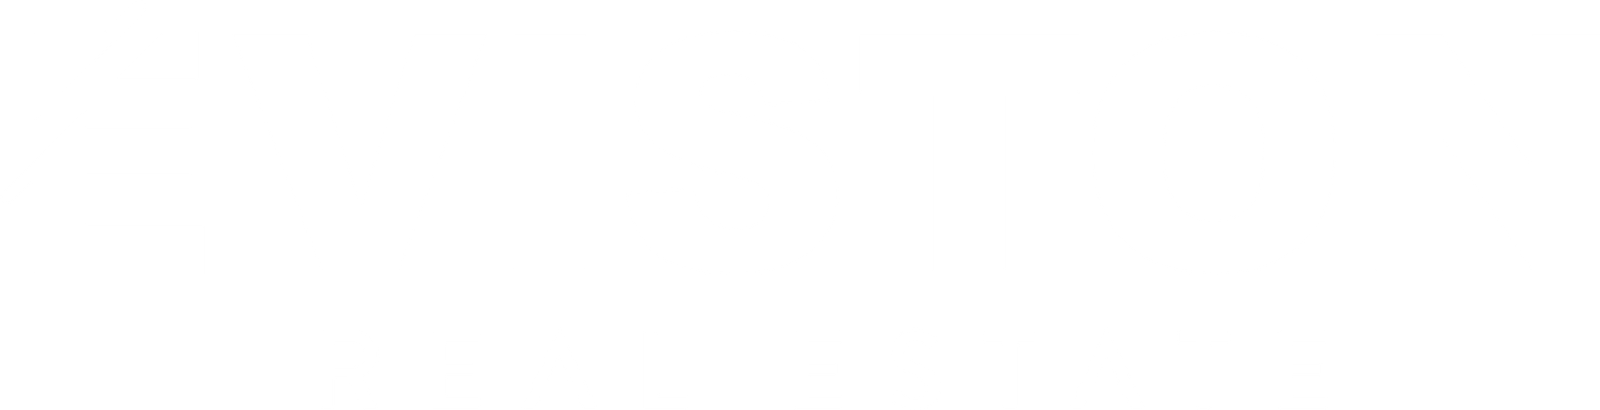 eviston-logo